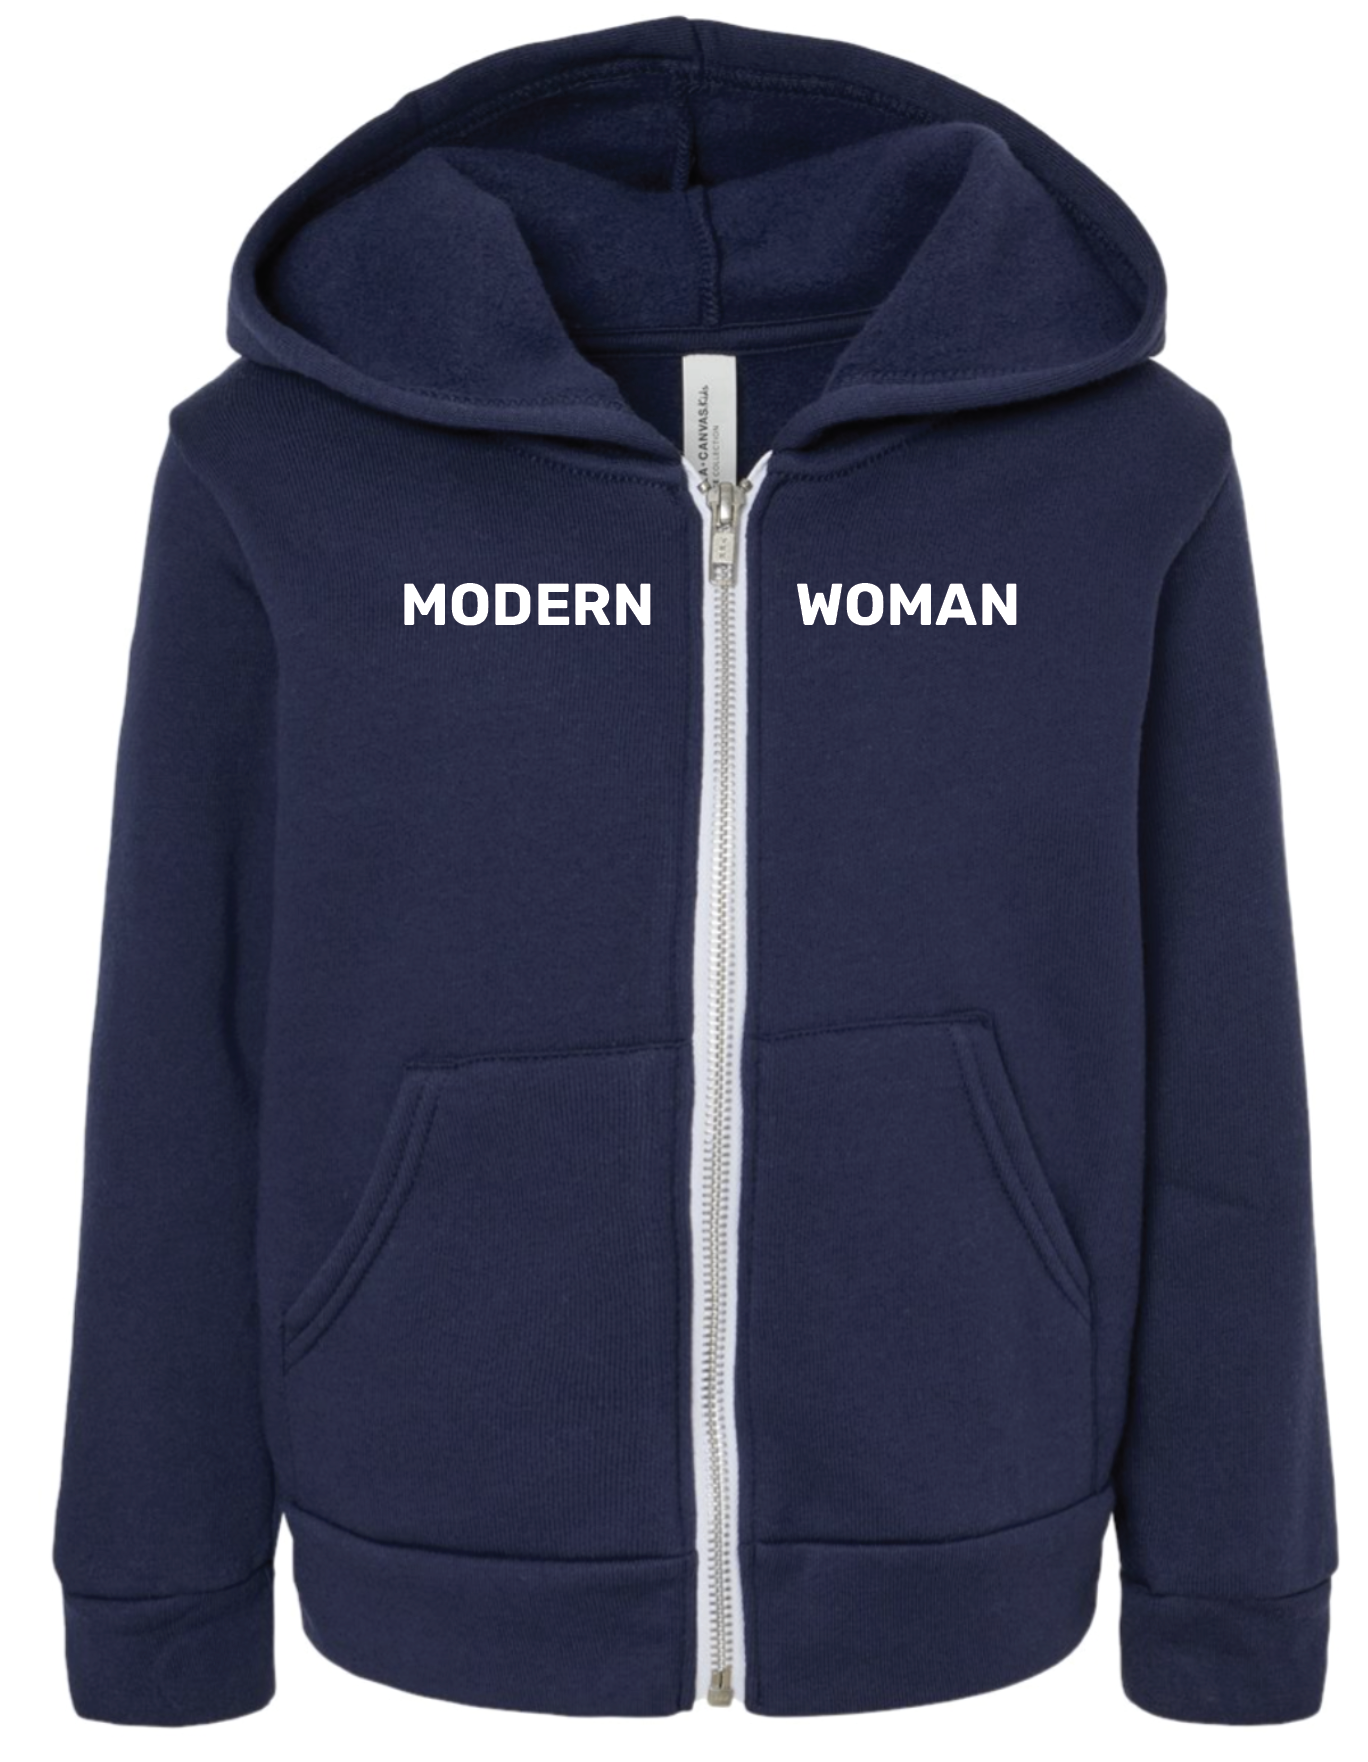 Modern Woman Full Zip Toddler/Youth Hoodie